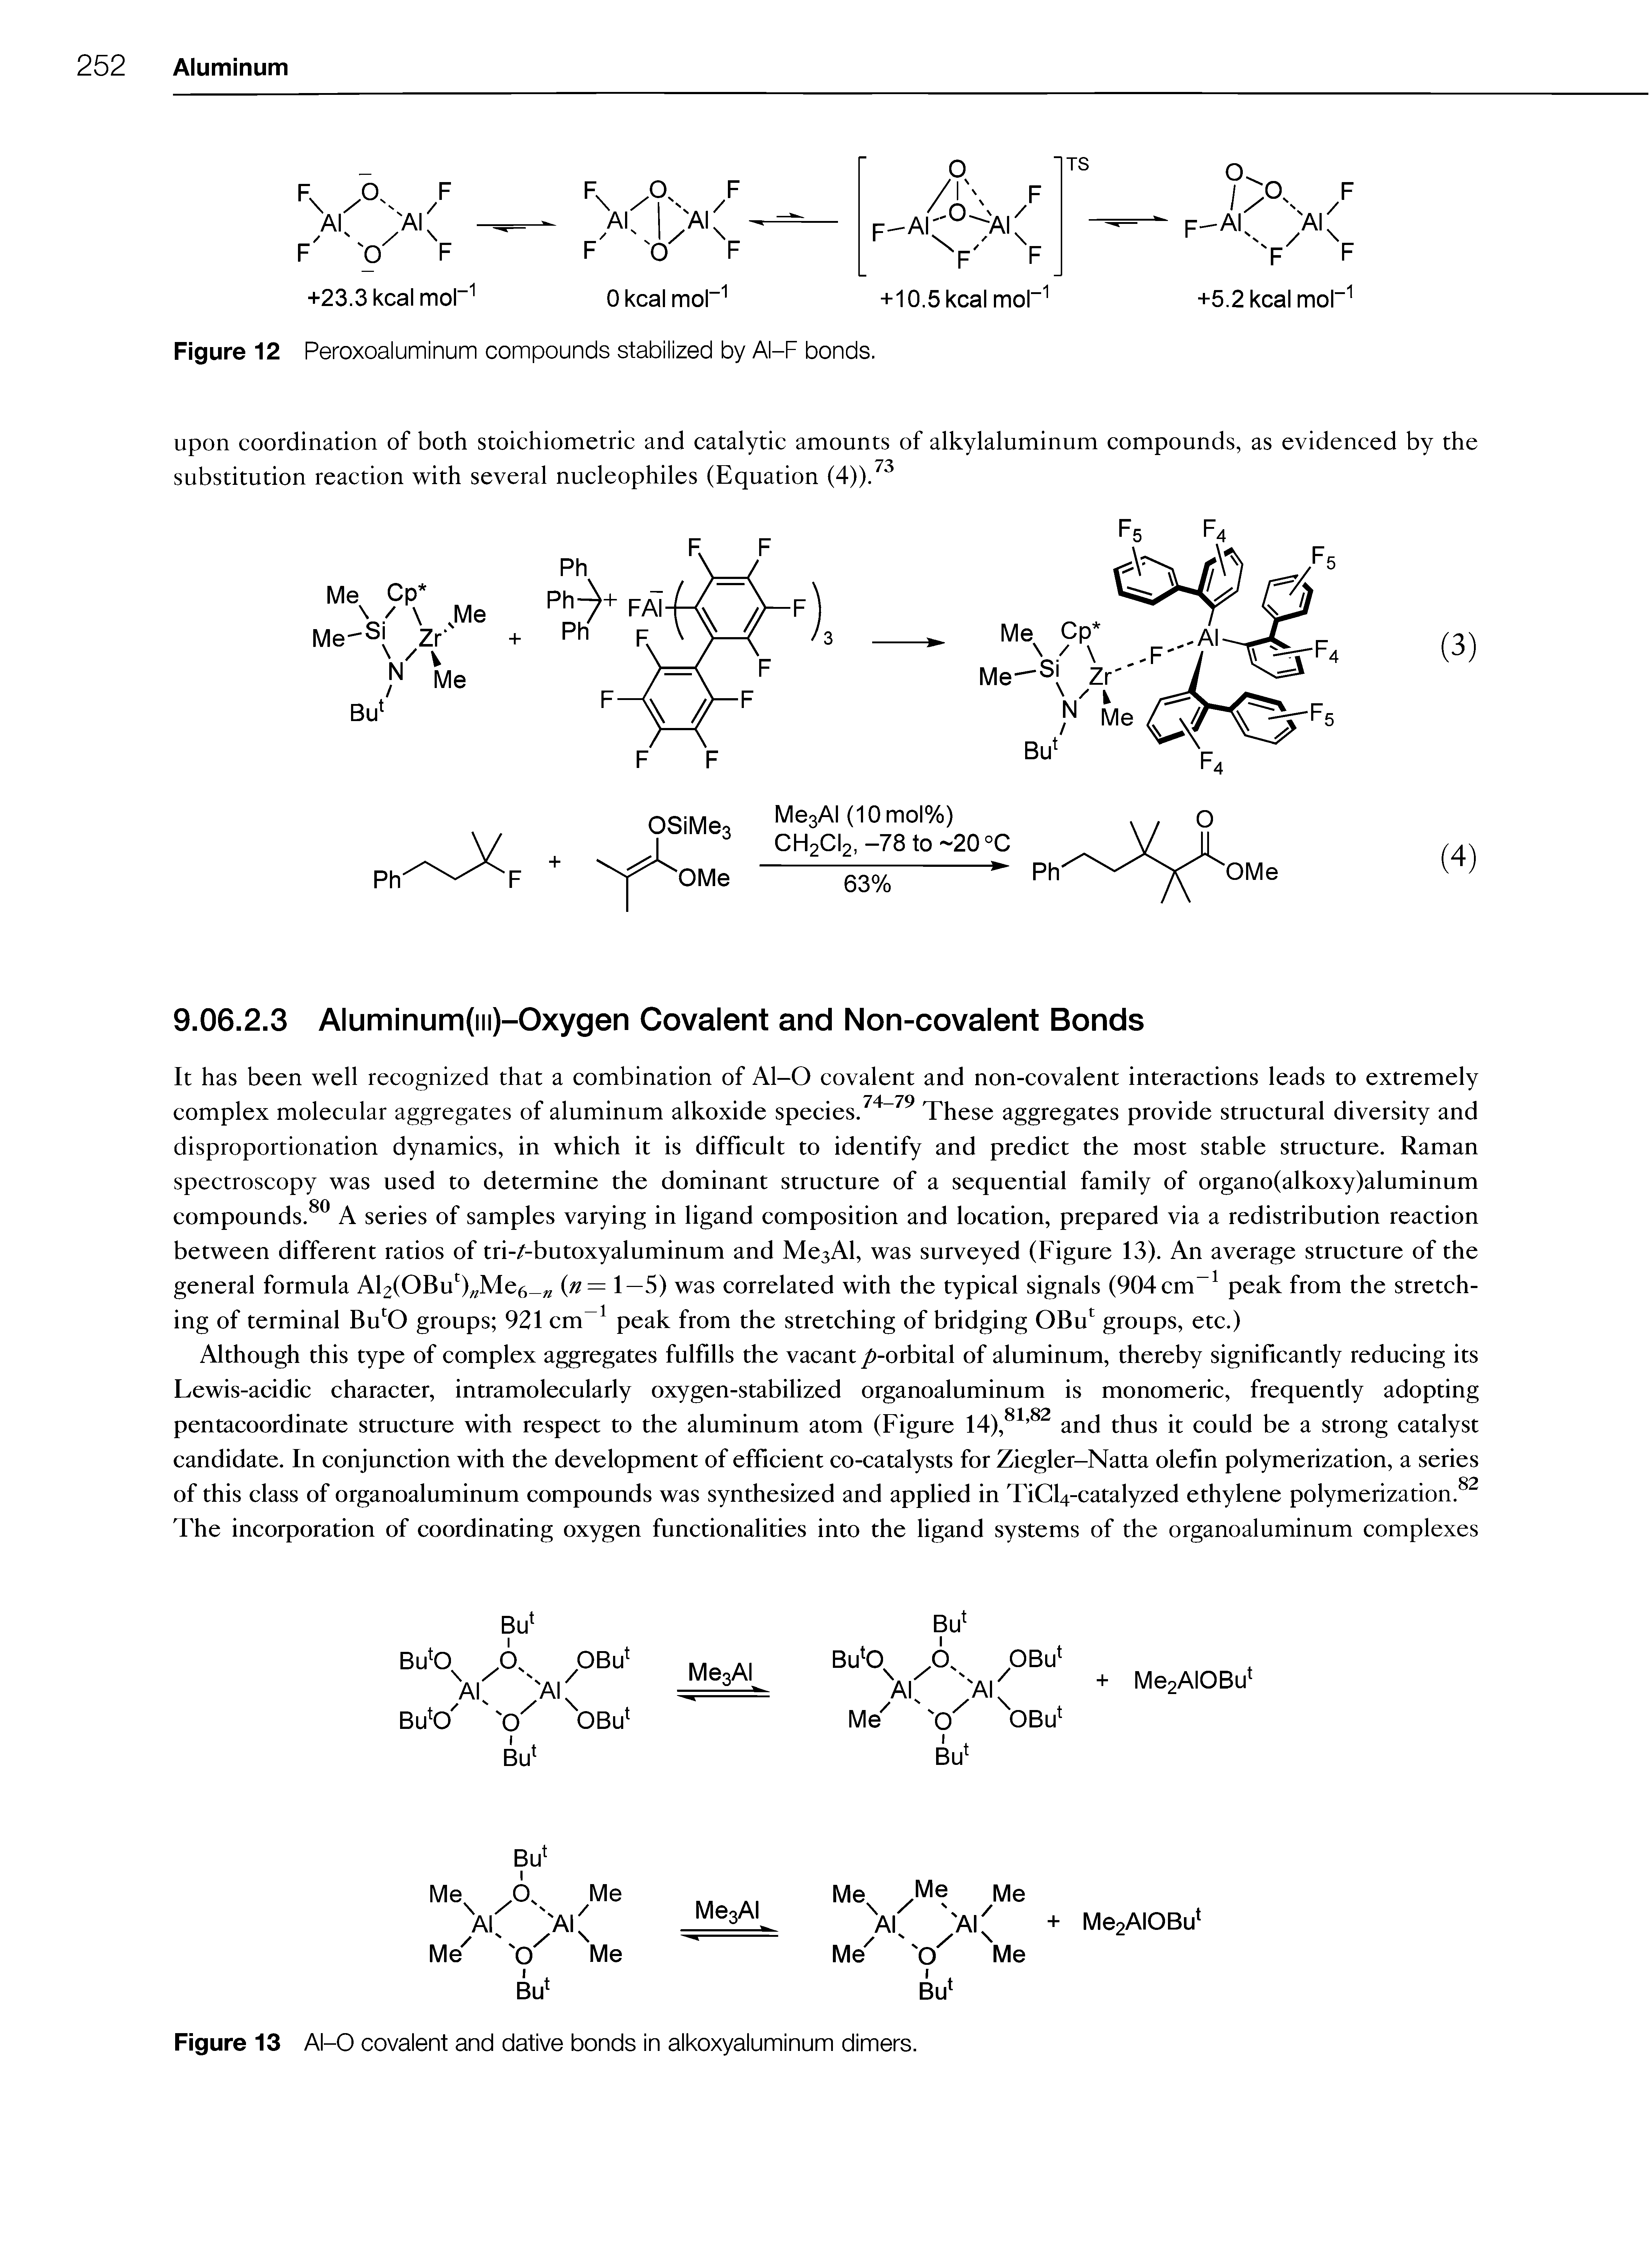 Figure 13 AI-0 covalent and dative bonds in alkoxyaluminum dimers.